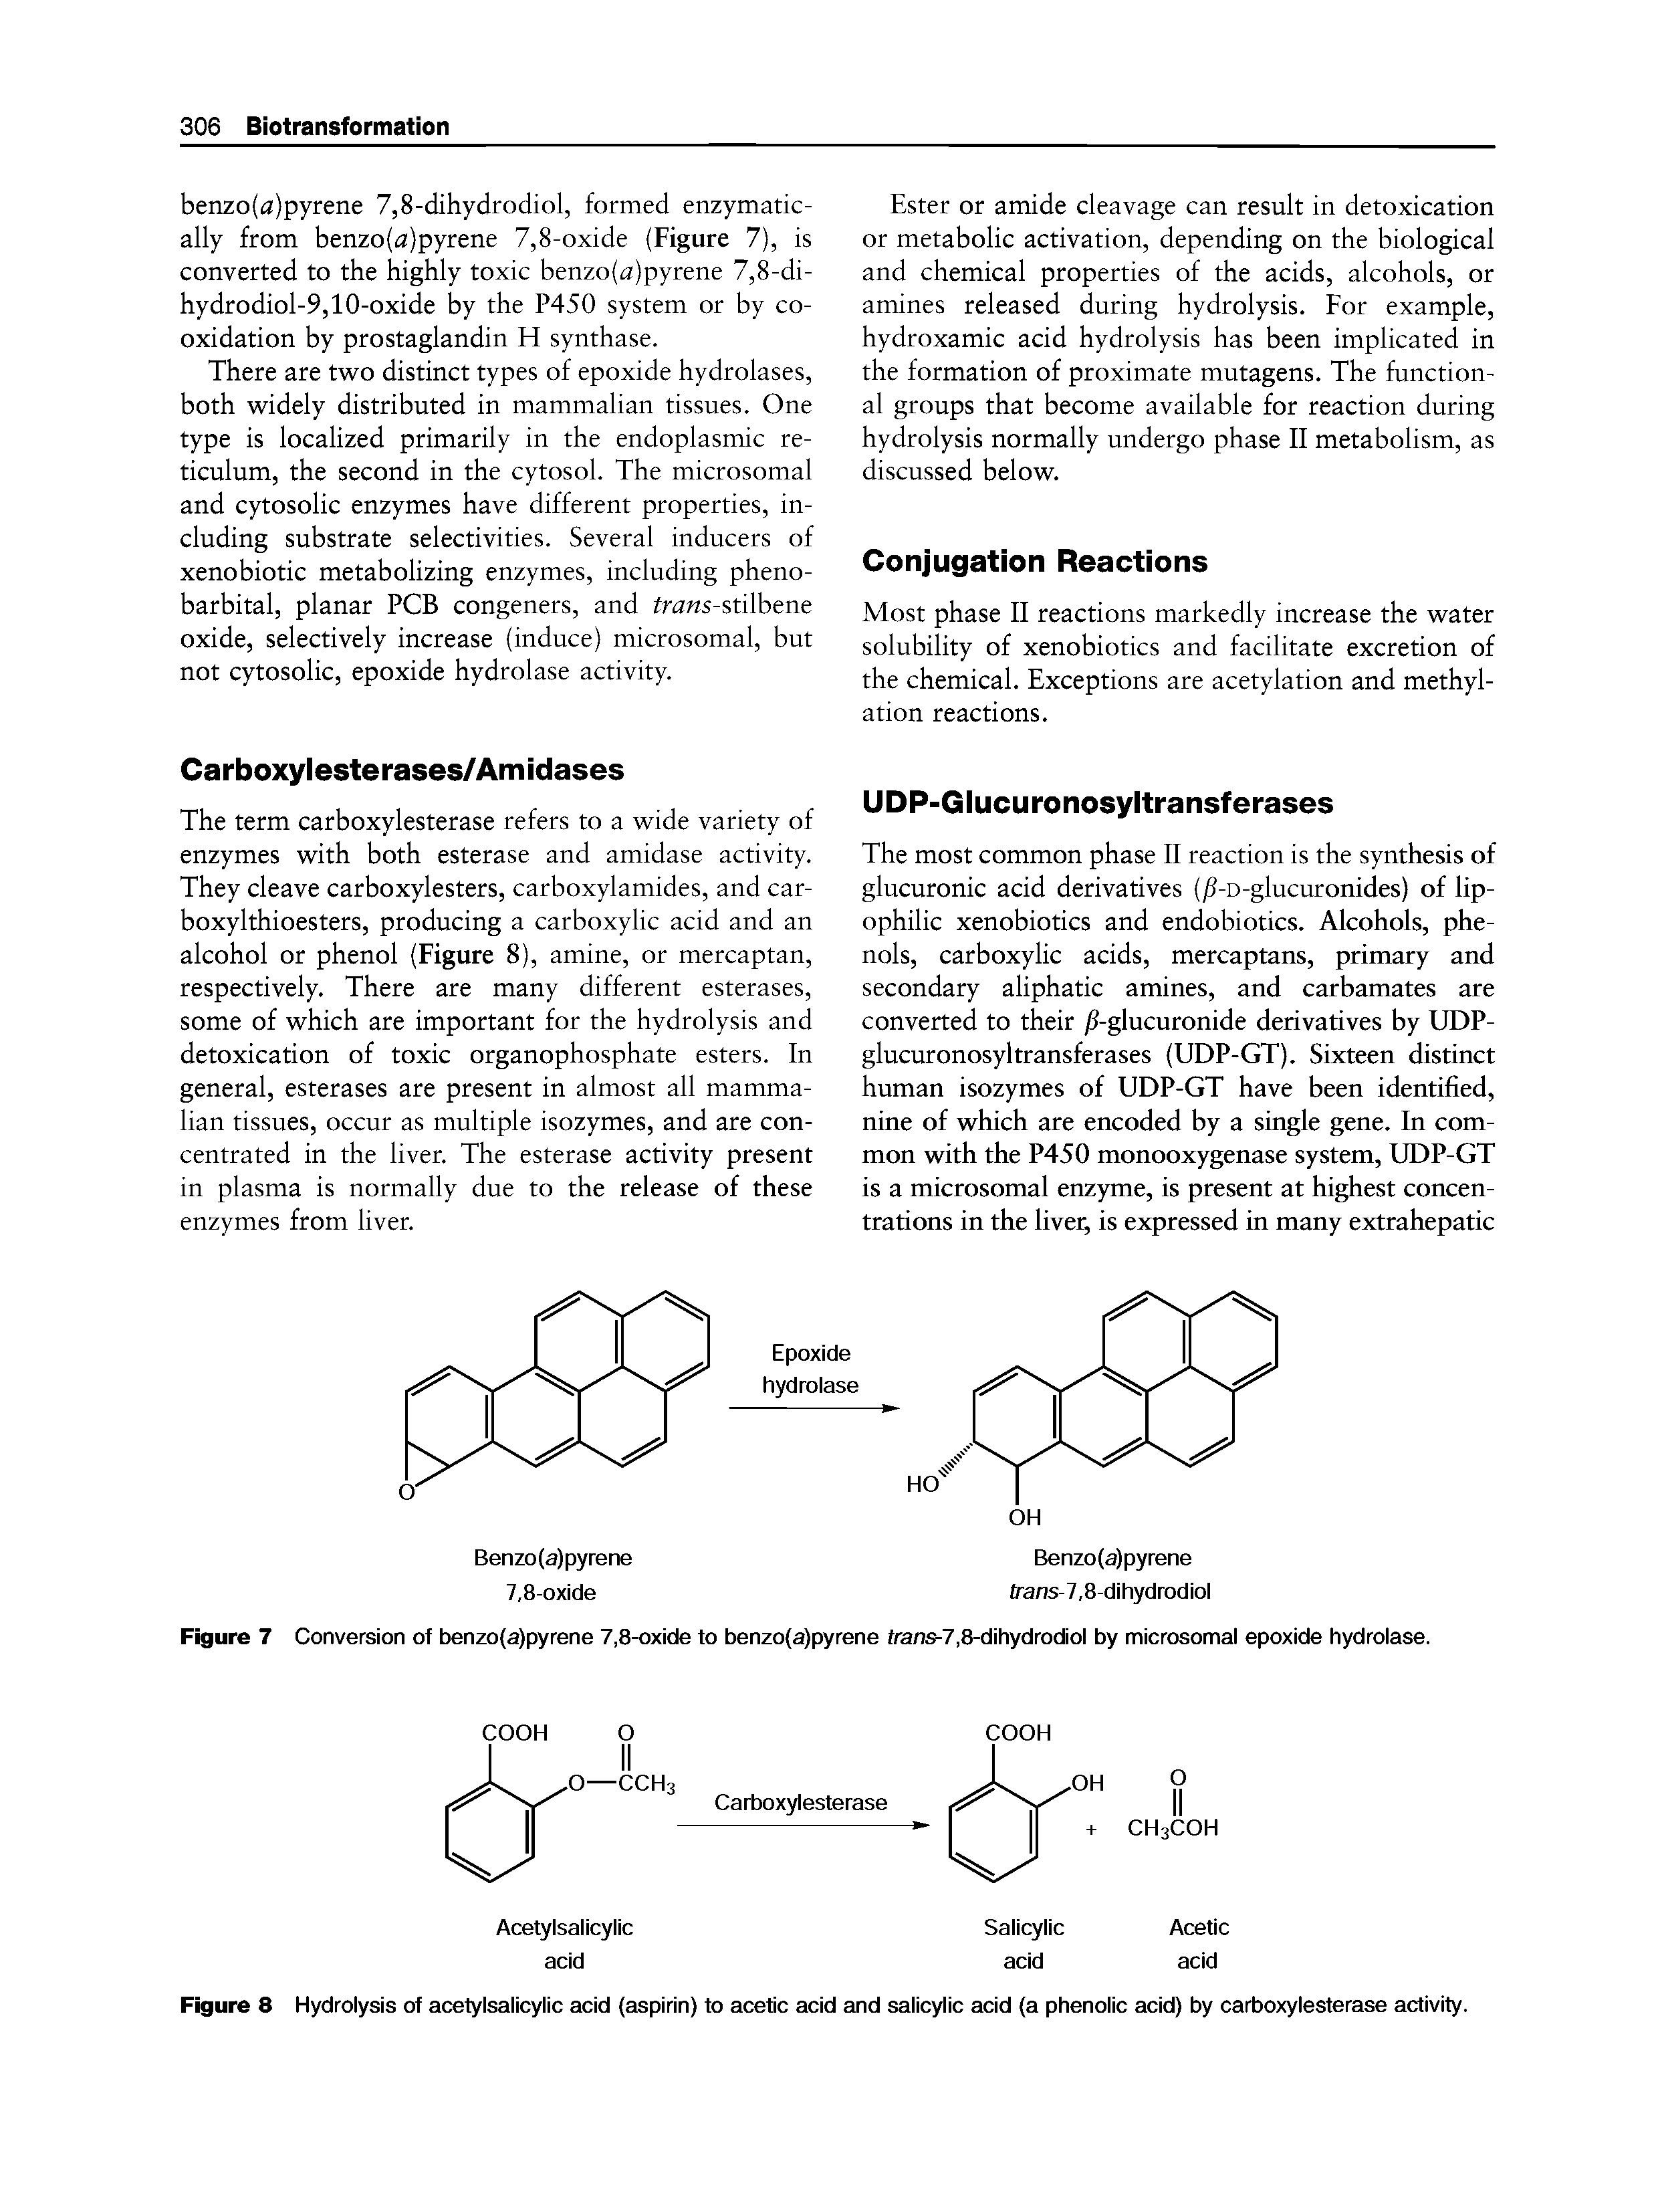 Figure 8 Hydrolysis of acetylsalicylic acid (aspirin) to acetic acid and salicylic acid (a phenolic acid) by carboxylesterase activity.